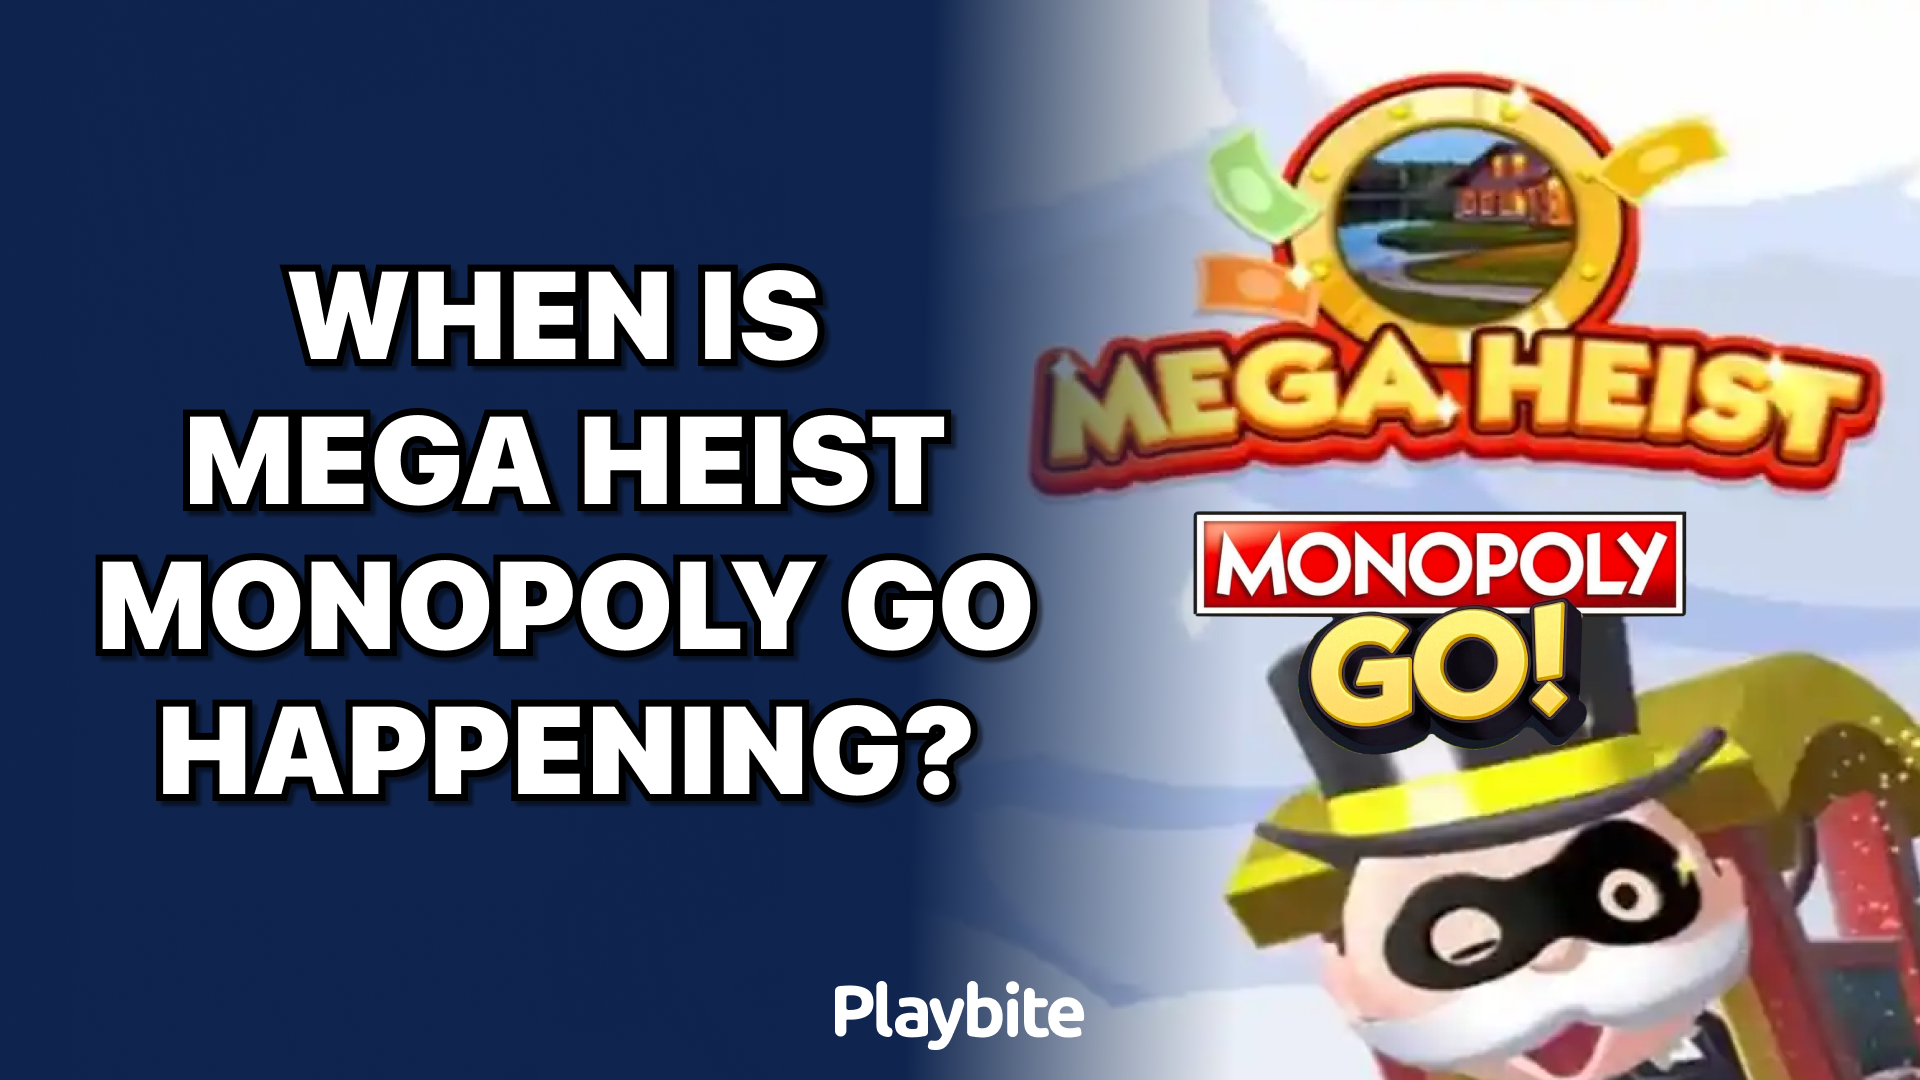 When Is Mega Heist Monopoly Go Happening?